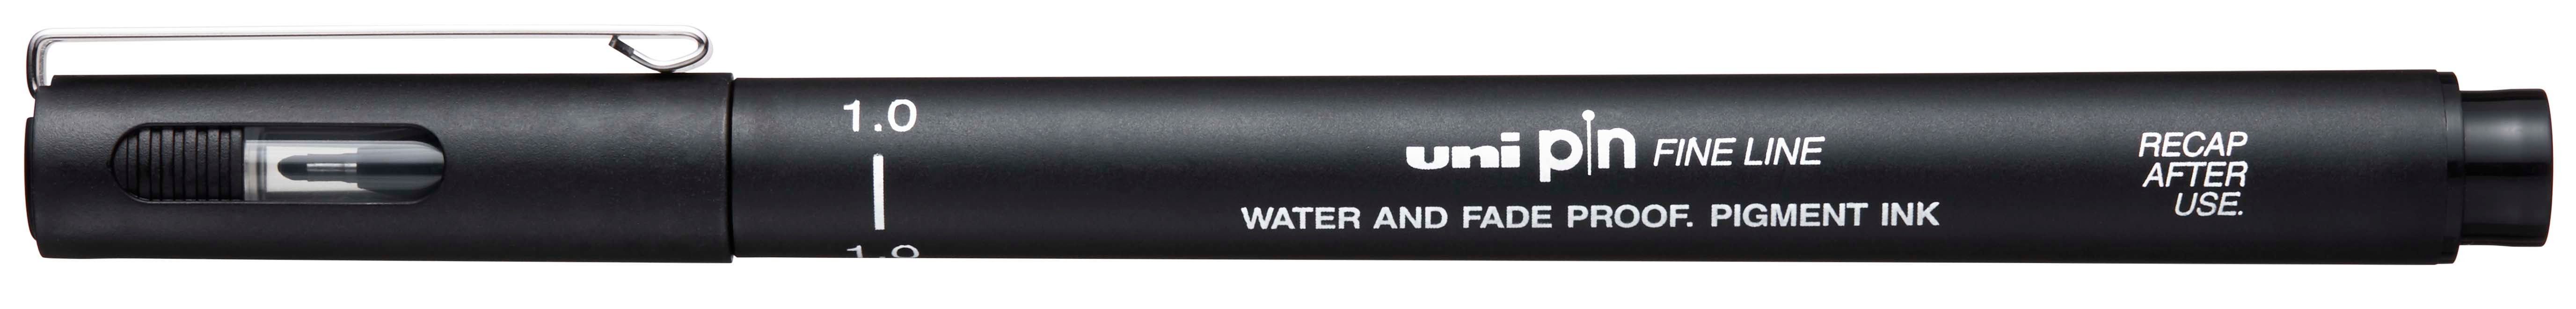 UNI-BALL Fineliner Pin 1mm PIN10-200(S) BLACK noir